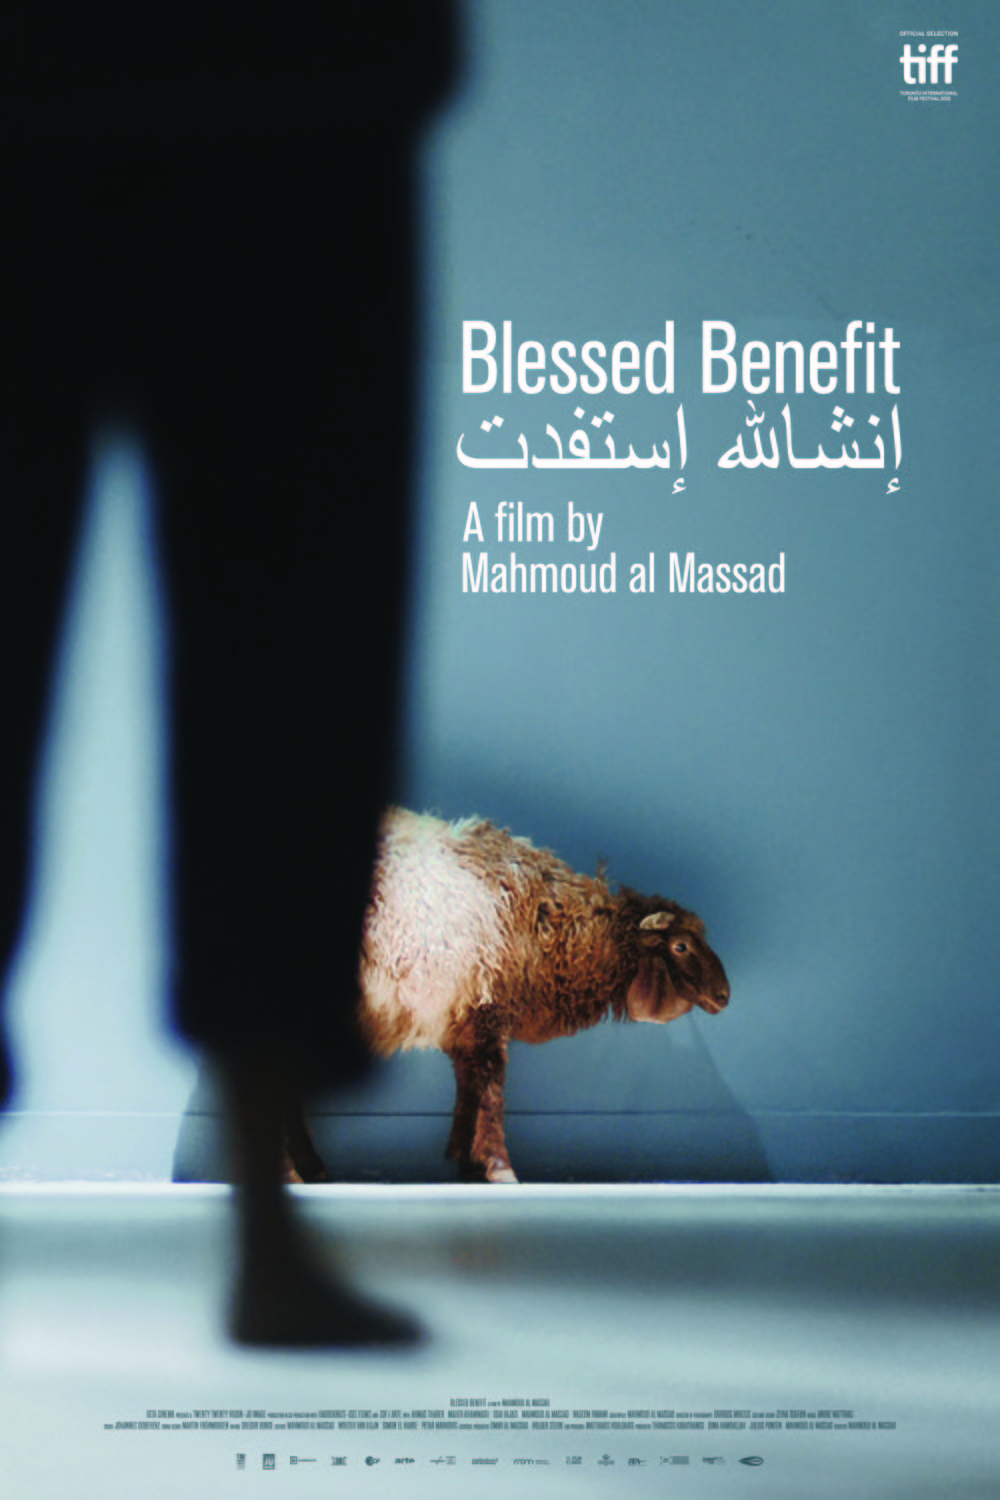 L'affiche originale du film Blessed Benefit en arabe